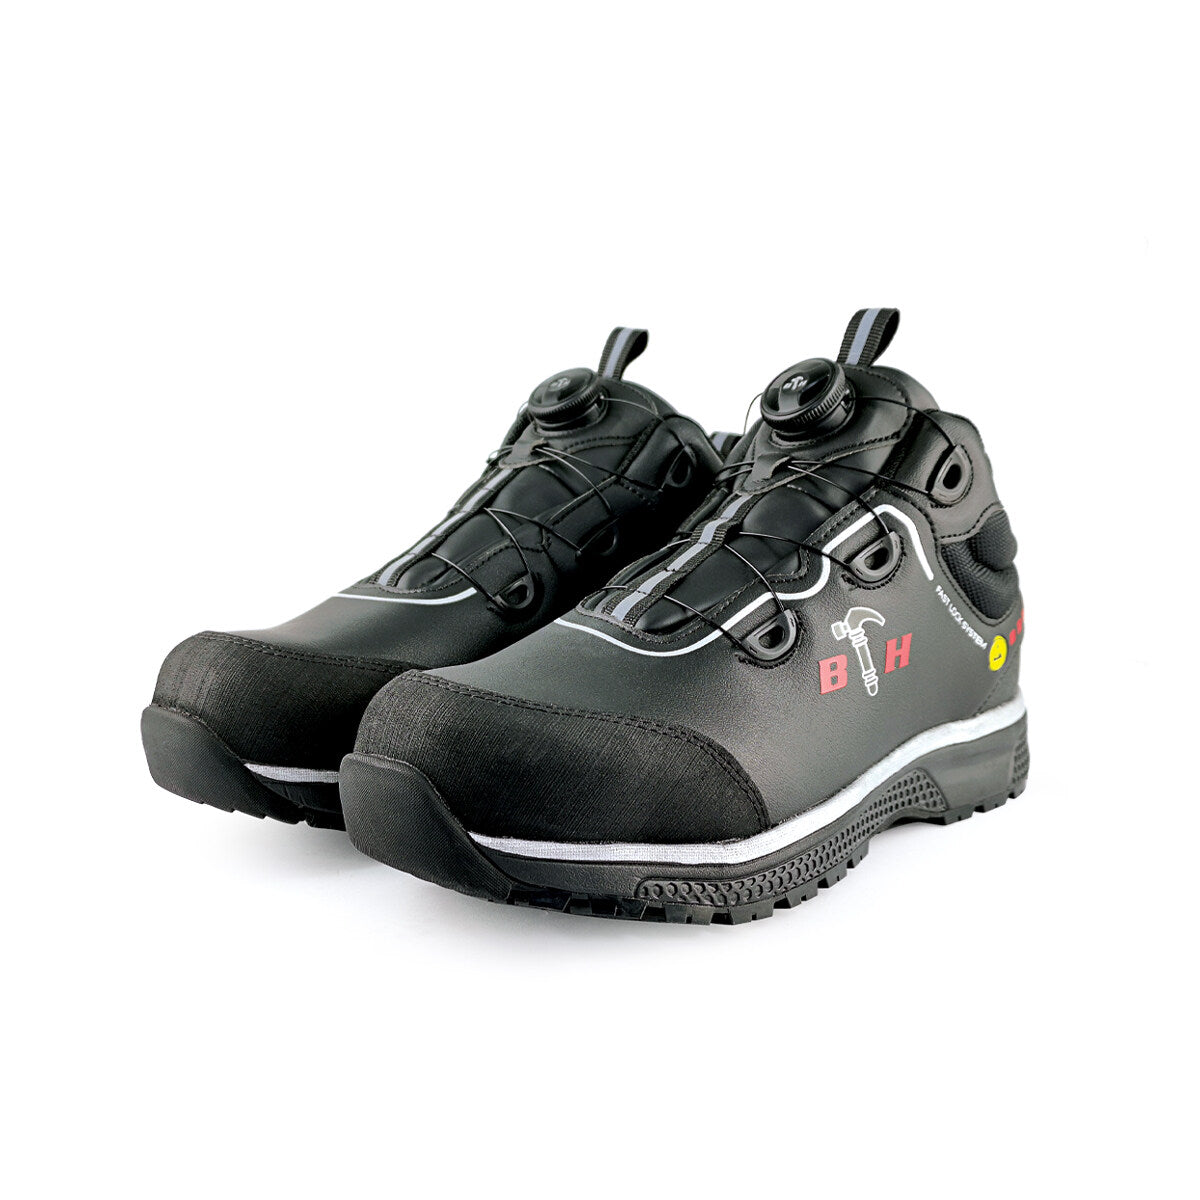 Black Hammer Pro Series Men Low Cut ESD Fastlock Light Weight Safety Shoe BHS-22002 Aluminium Toe Cap . Ultra Light Weight Safety Shoes. Best safety shoes malaysia. Composite Toe-cap. ESD Safety Shoes